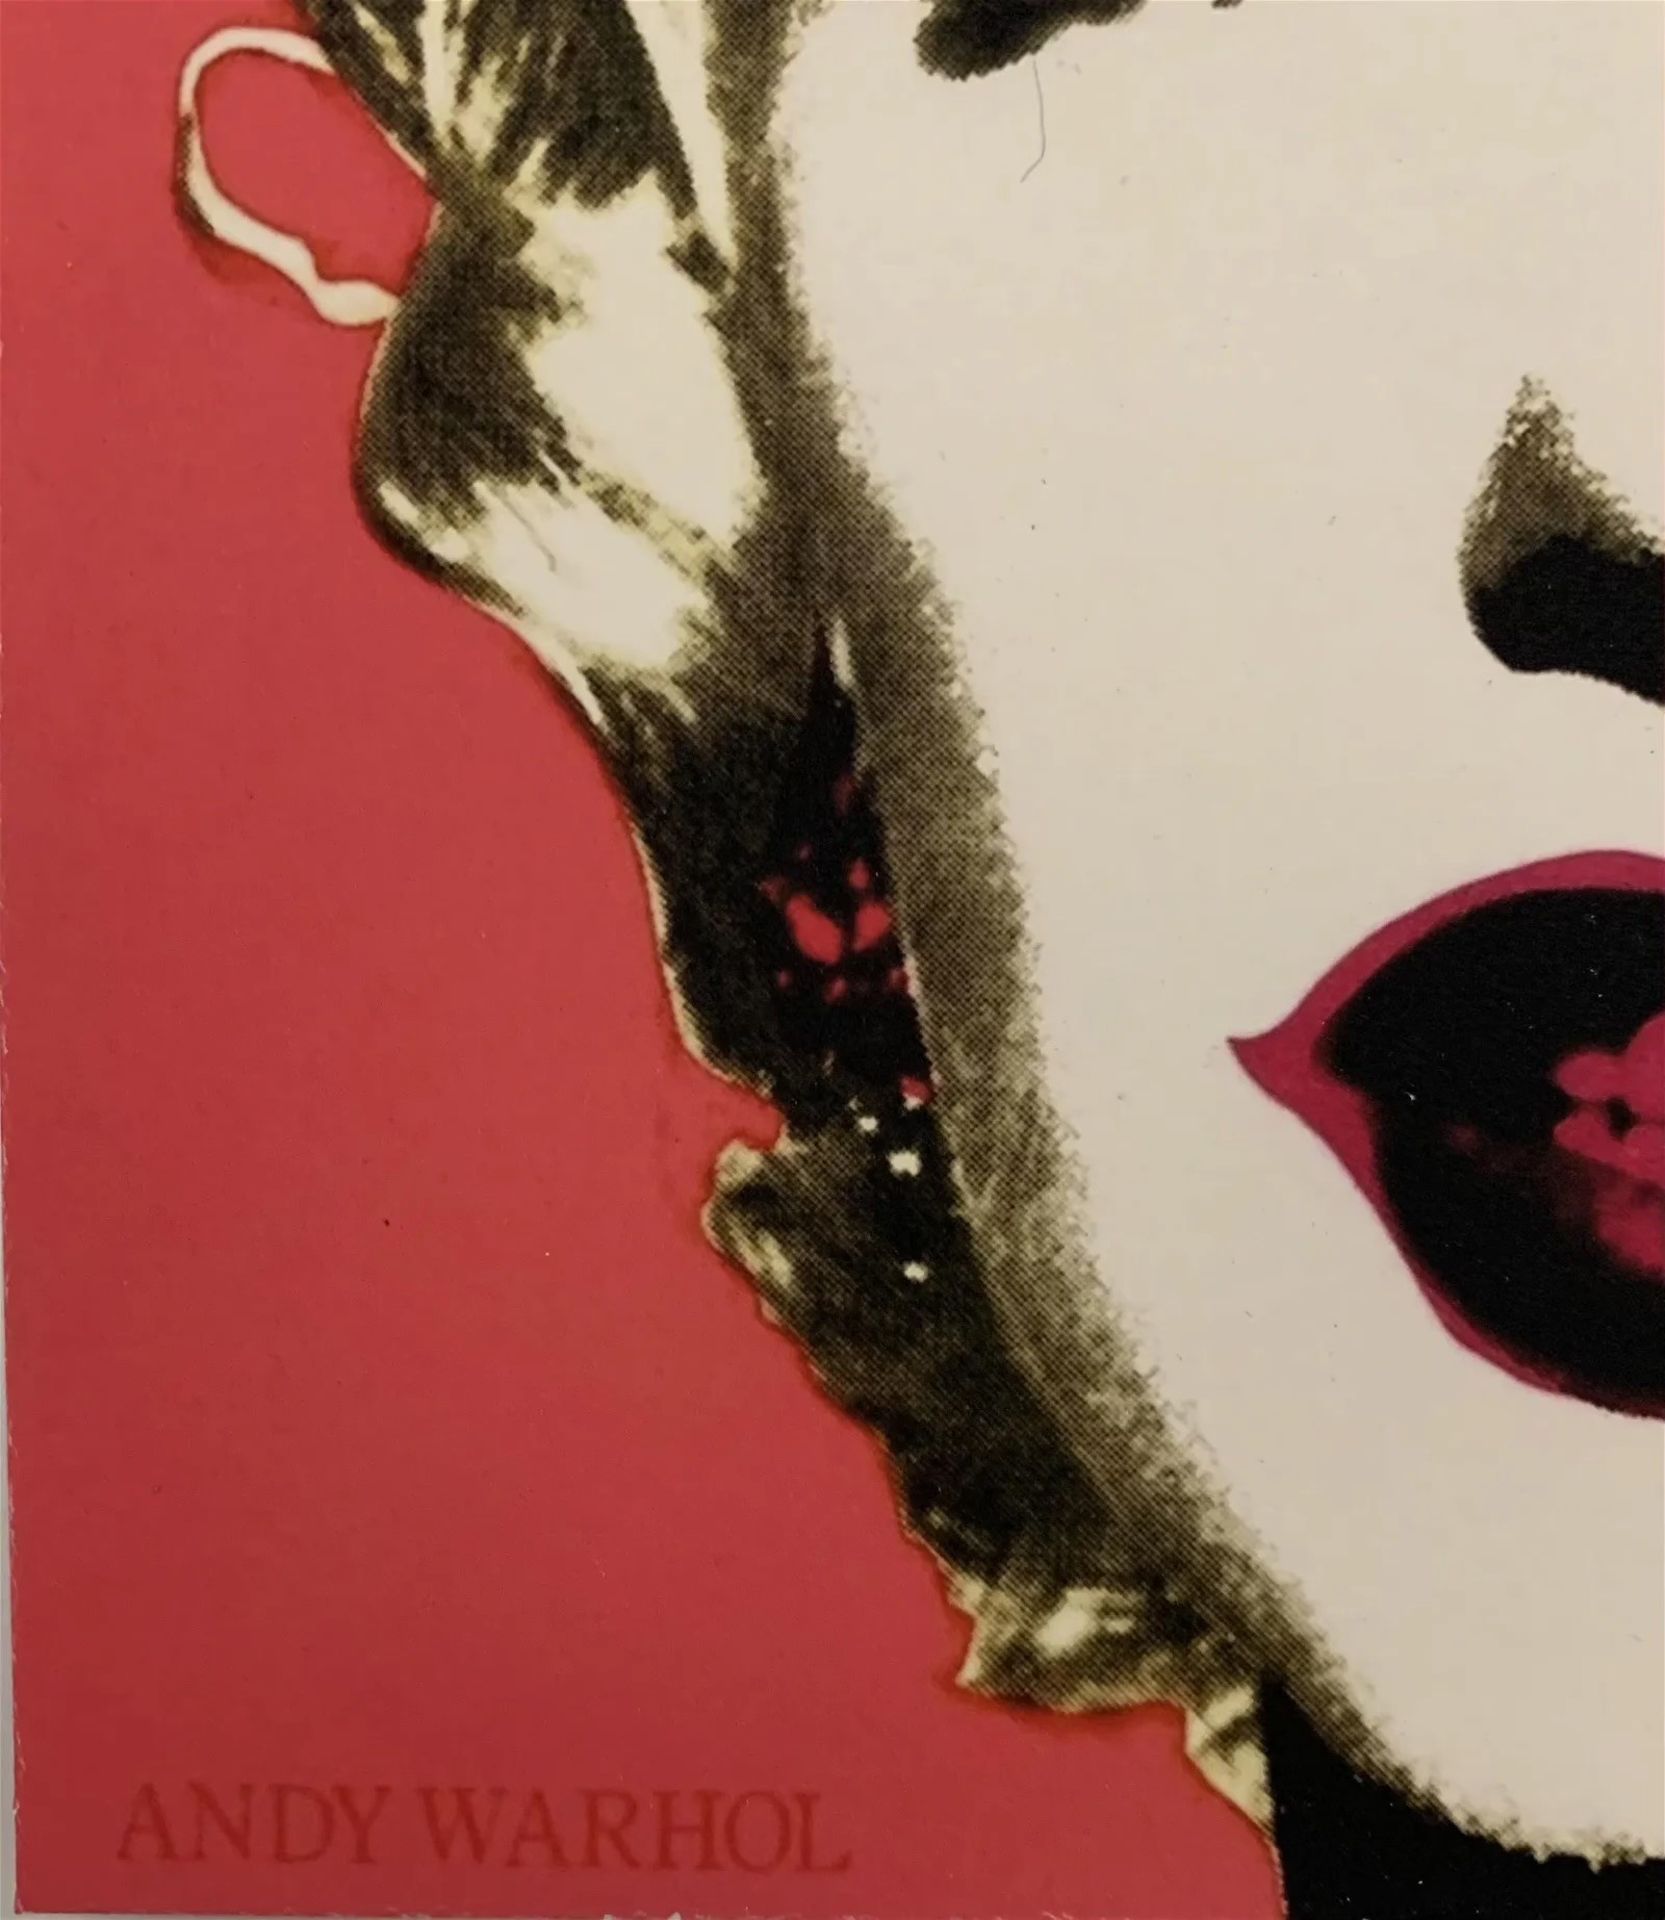 Andy Warhol-Marilyn Monroe Leo Castelli Print - Image 2 of 3